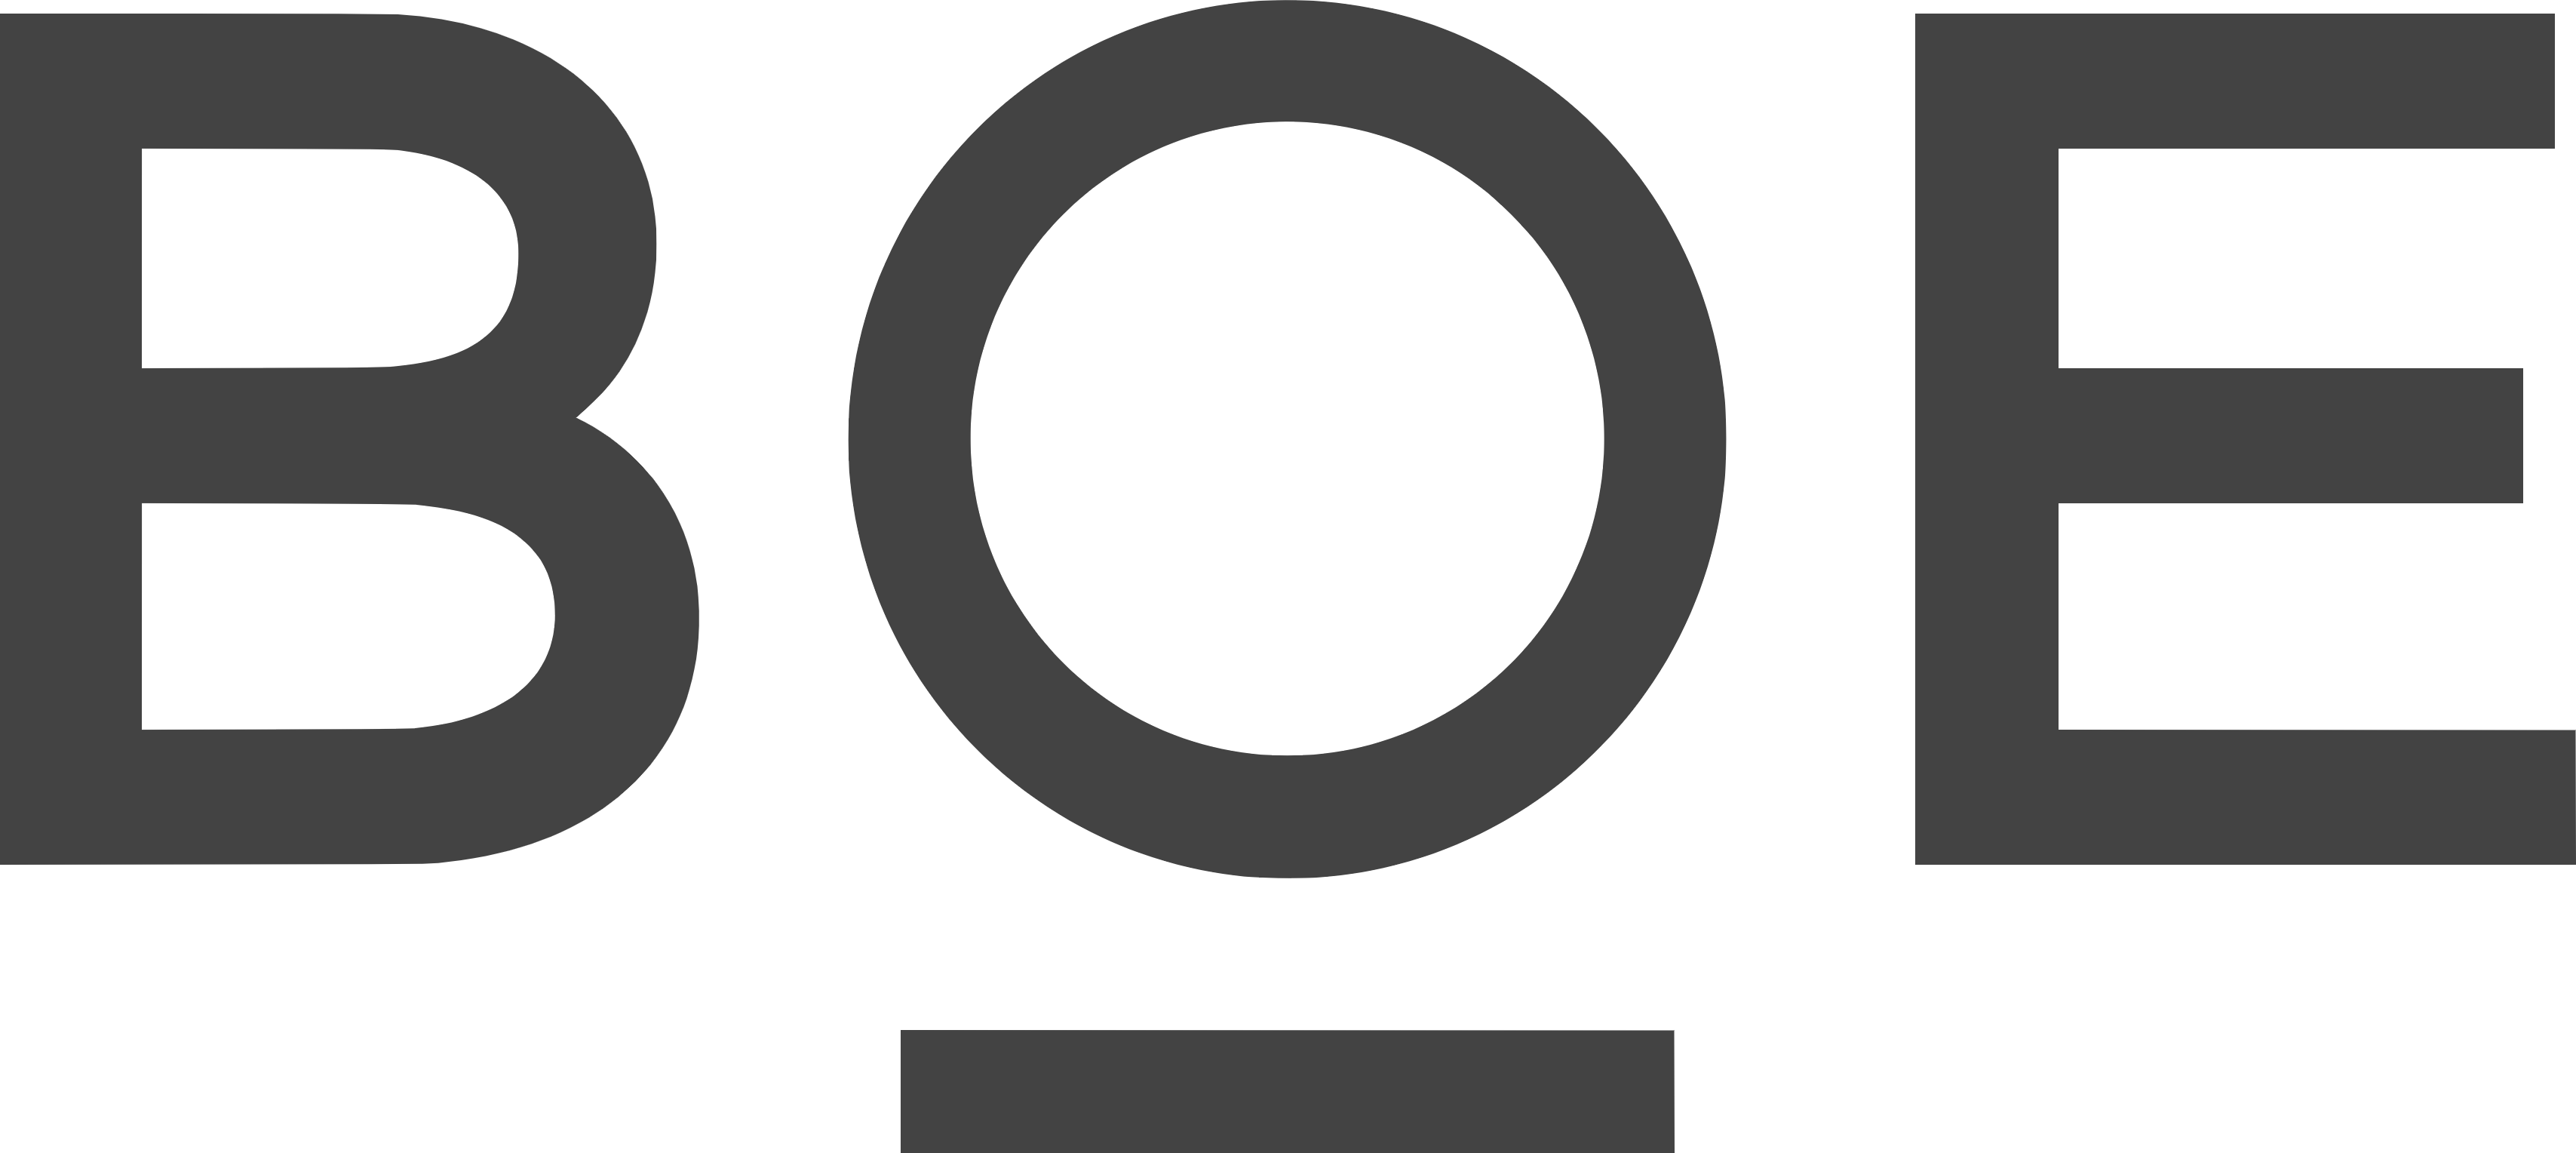 BOE Technology logo (transparent PNG)